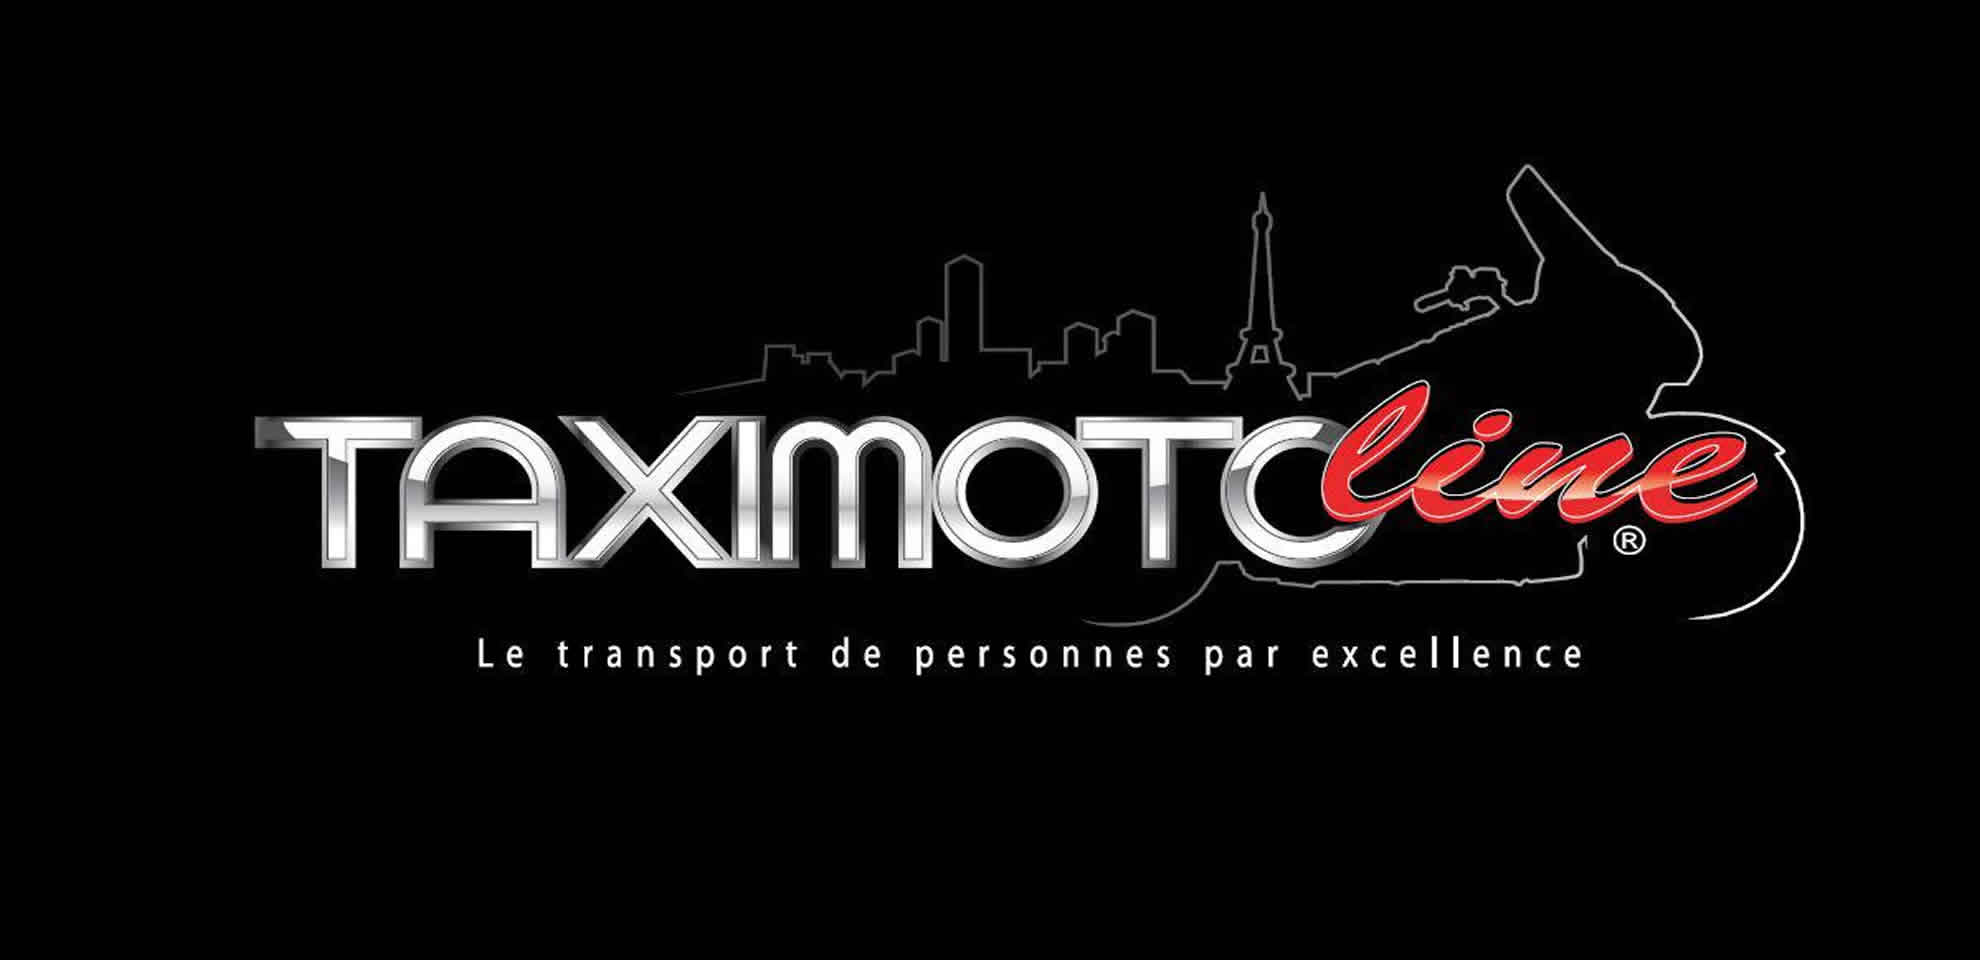 Taxi Moto Line